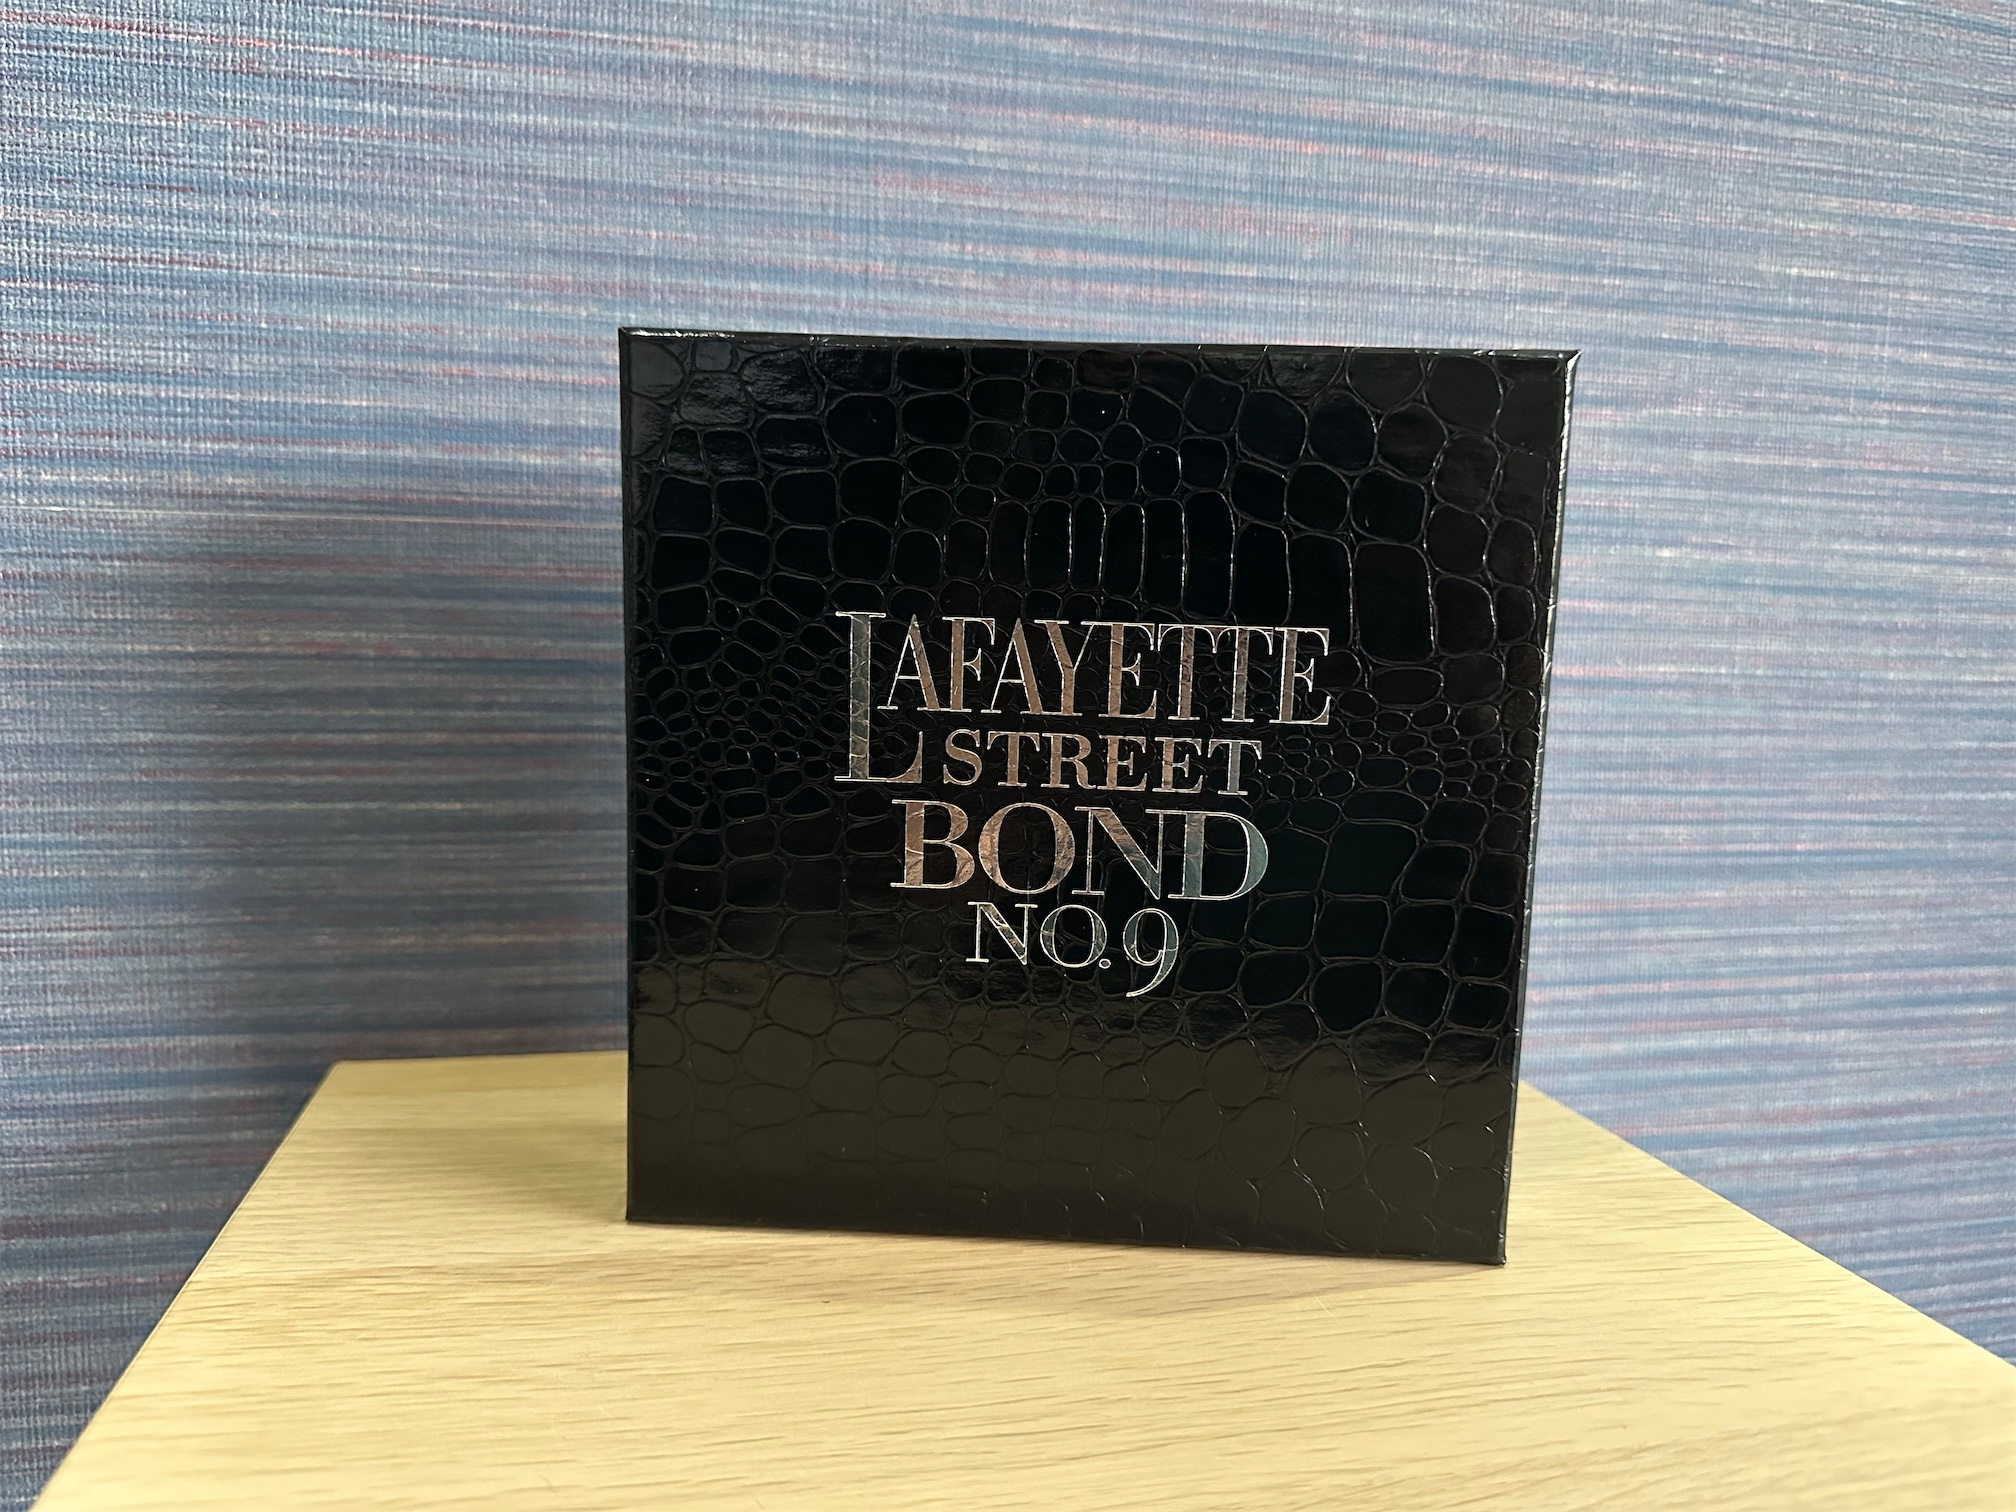 joyas, relojes y accesorios - Vendo Perfume Bond No.9 LAFAYETTE STREET - Nuevo| Original RD$ 18,500 NEG 0